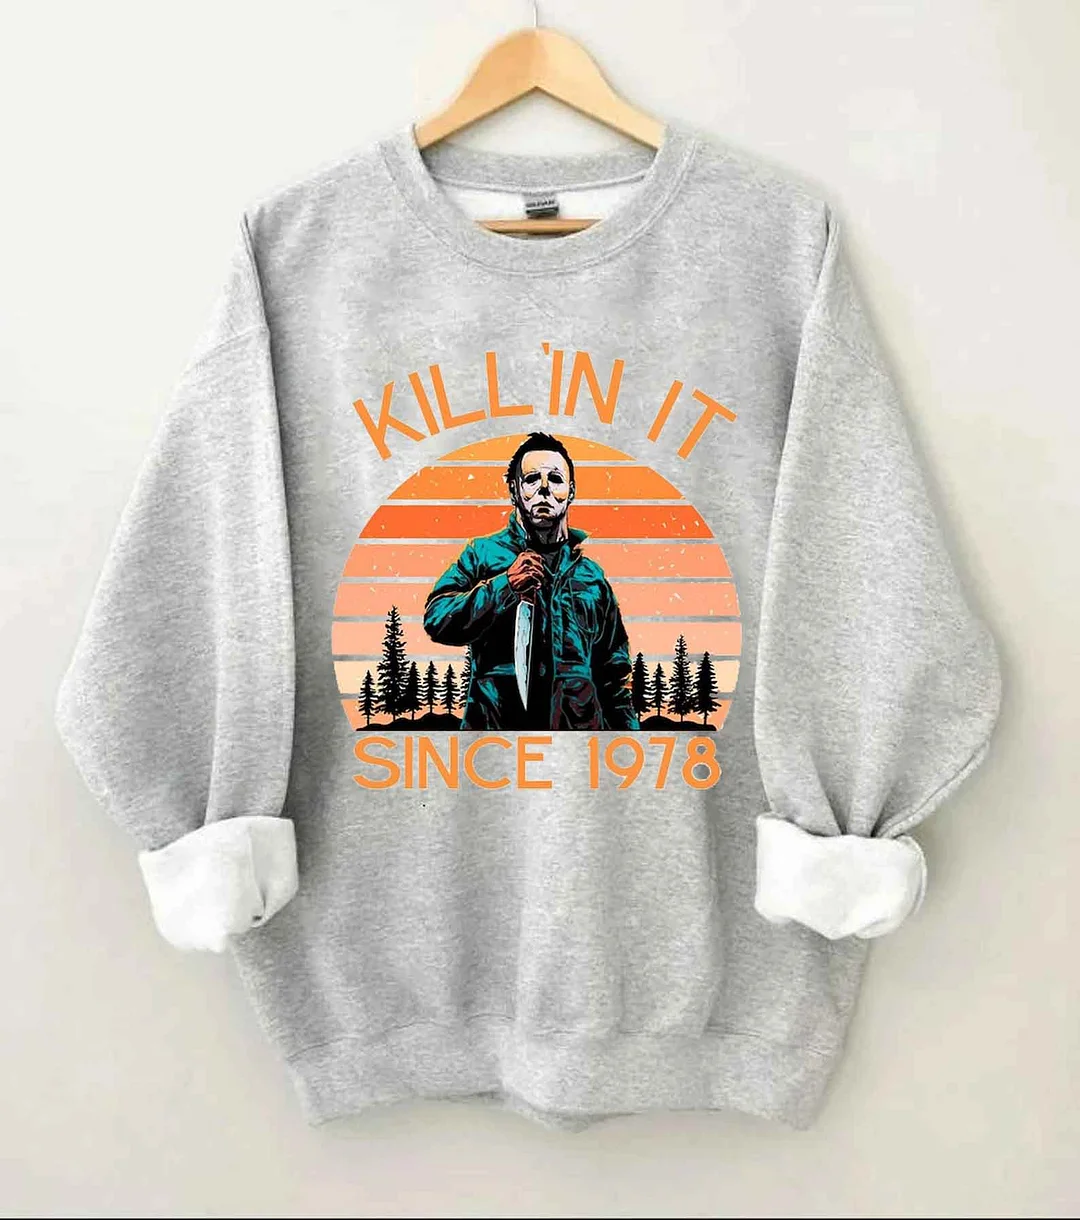 Killin It Sweatshirt